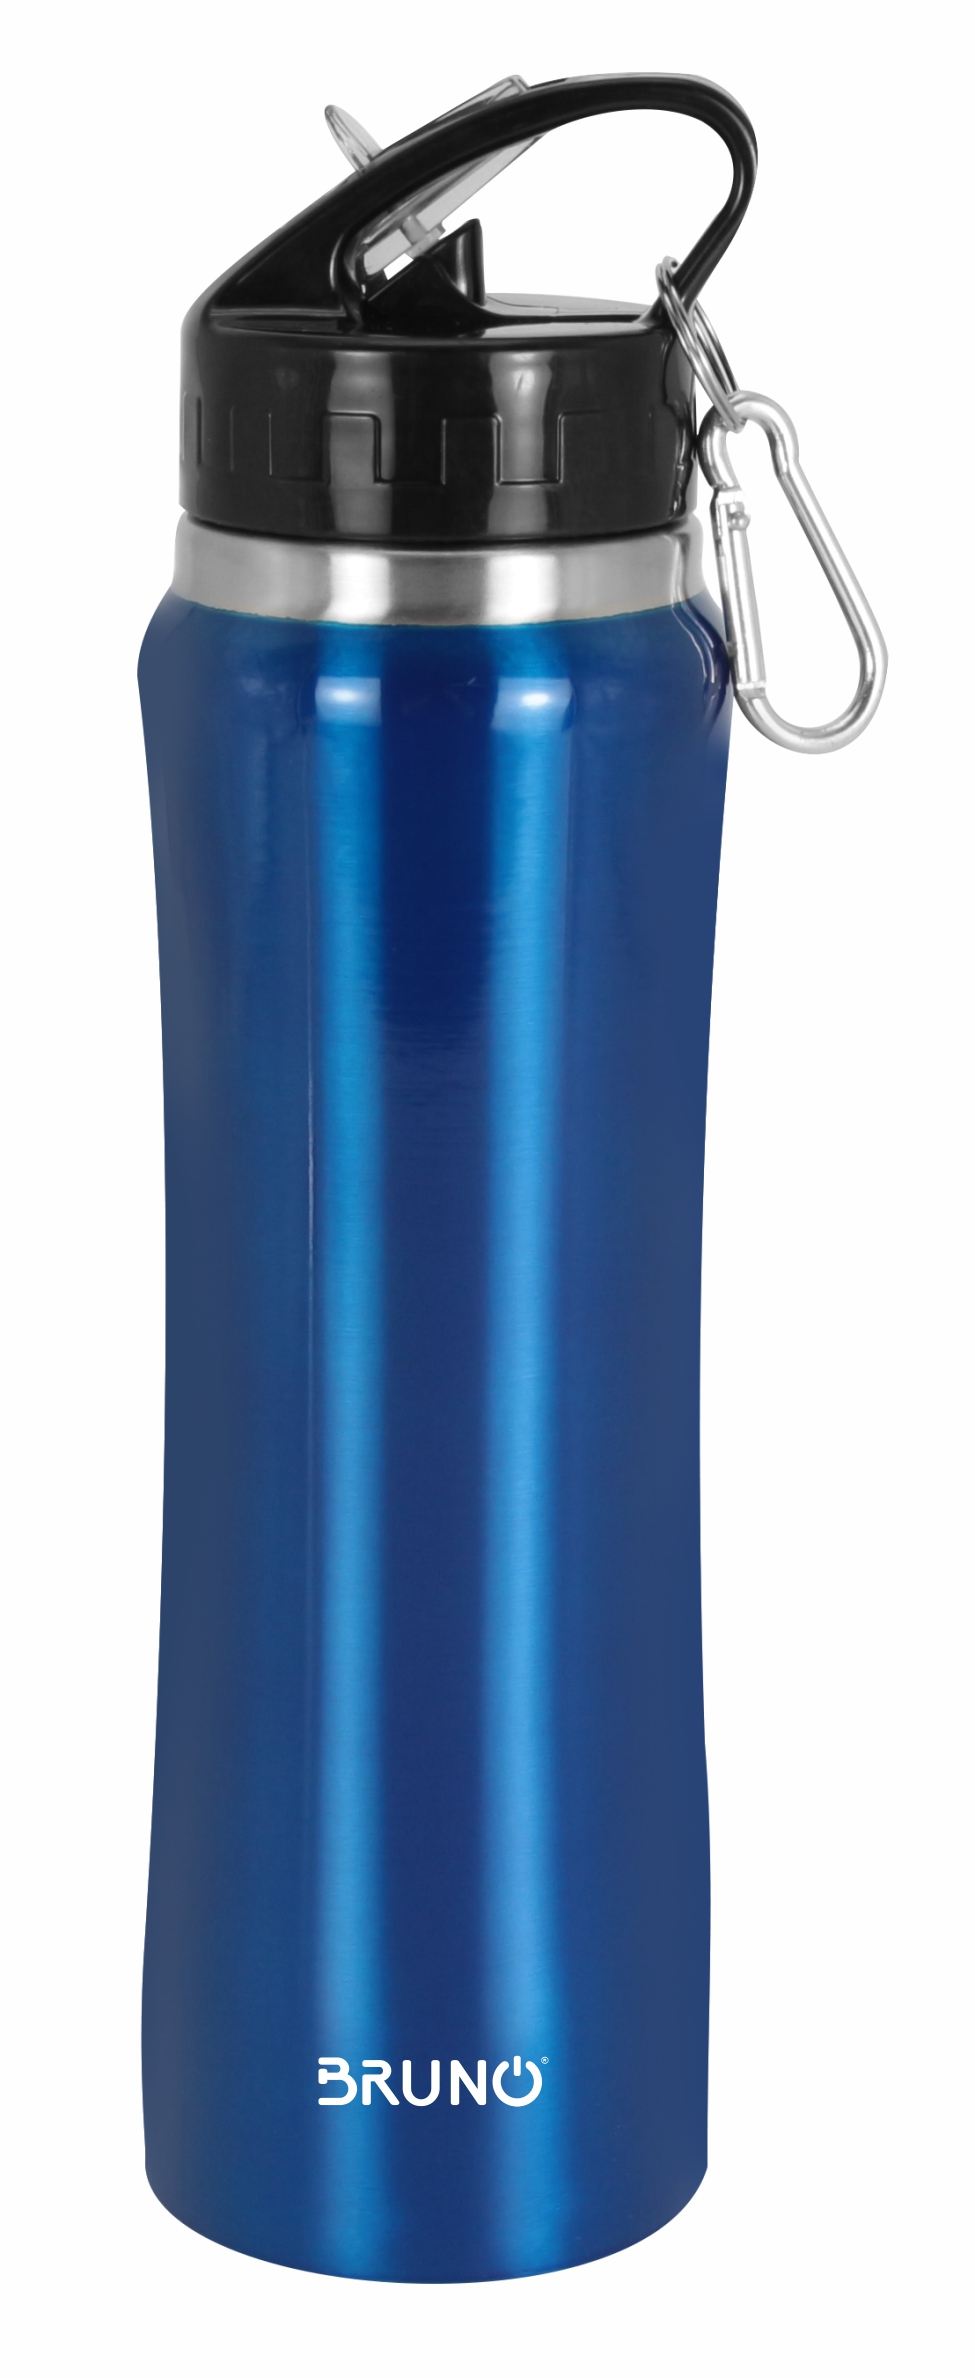 BRUNO θερμός BRN-0070, με καλαμάκι & γάντζο, anti-slip, 750ml, μπλε -κωδικός BRN-0070